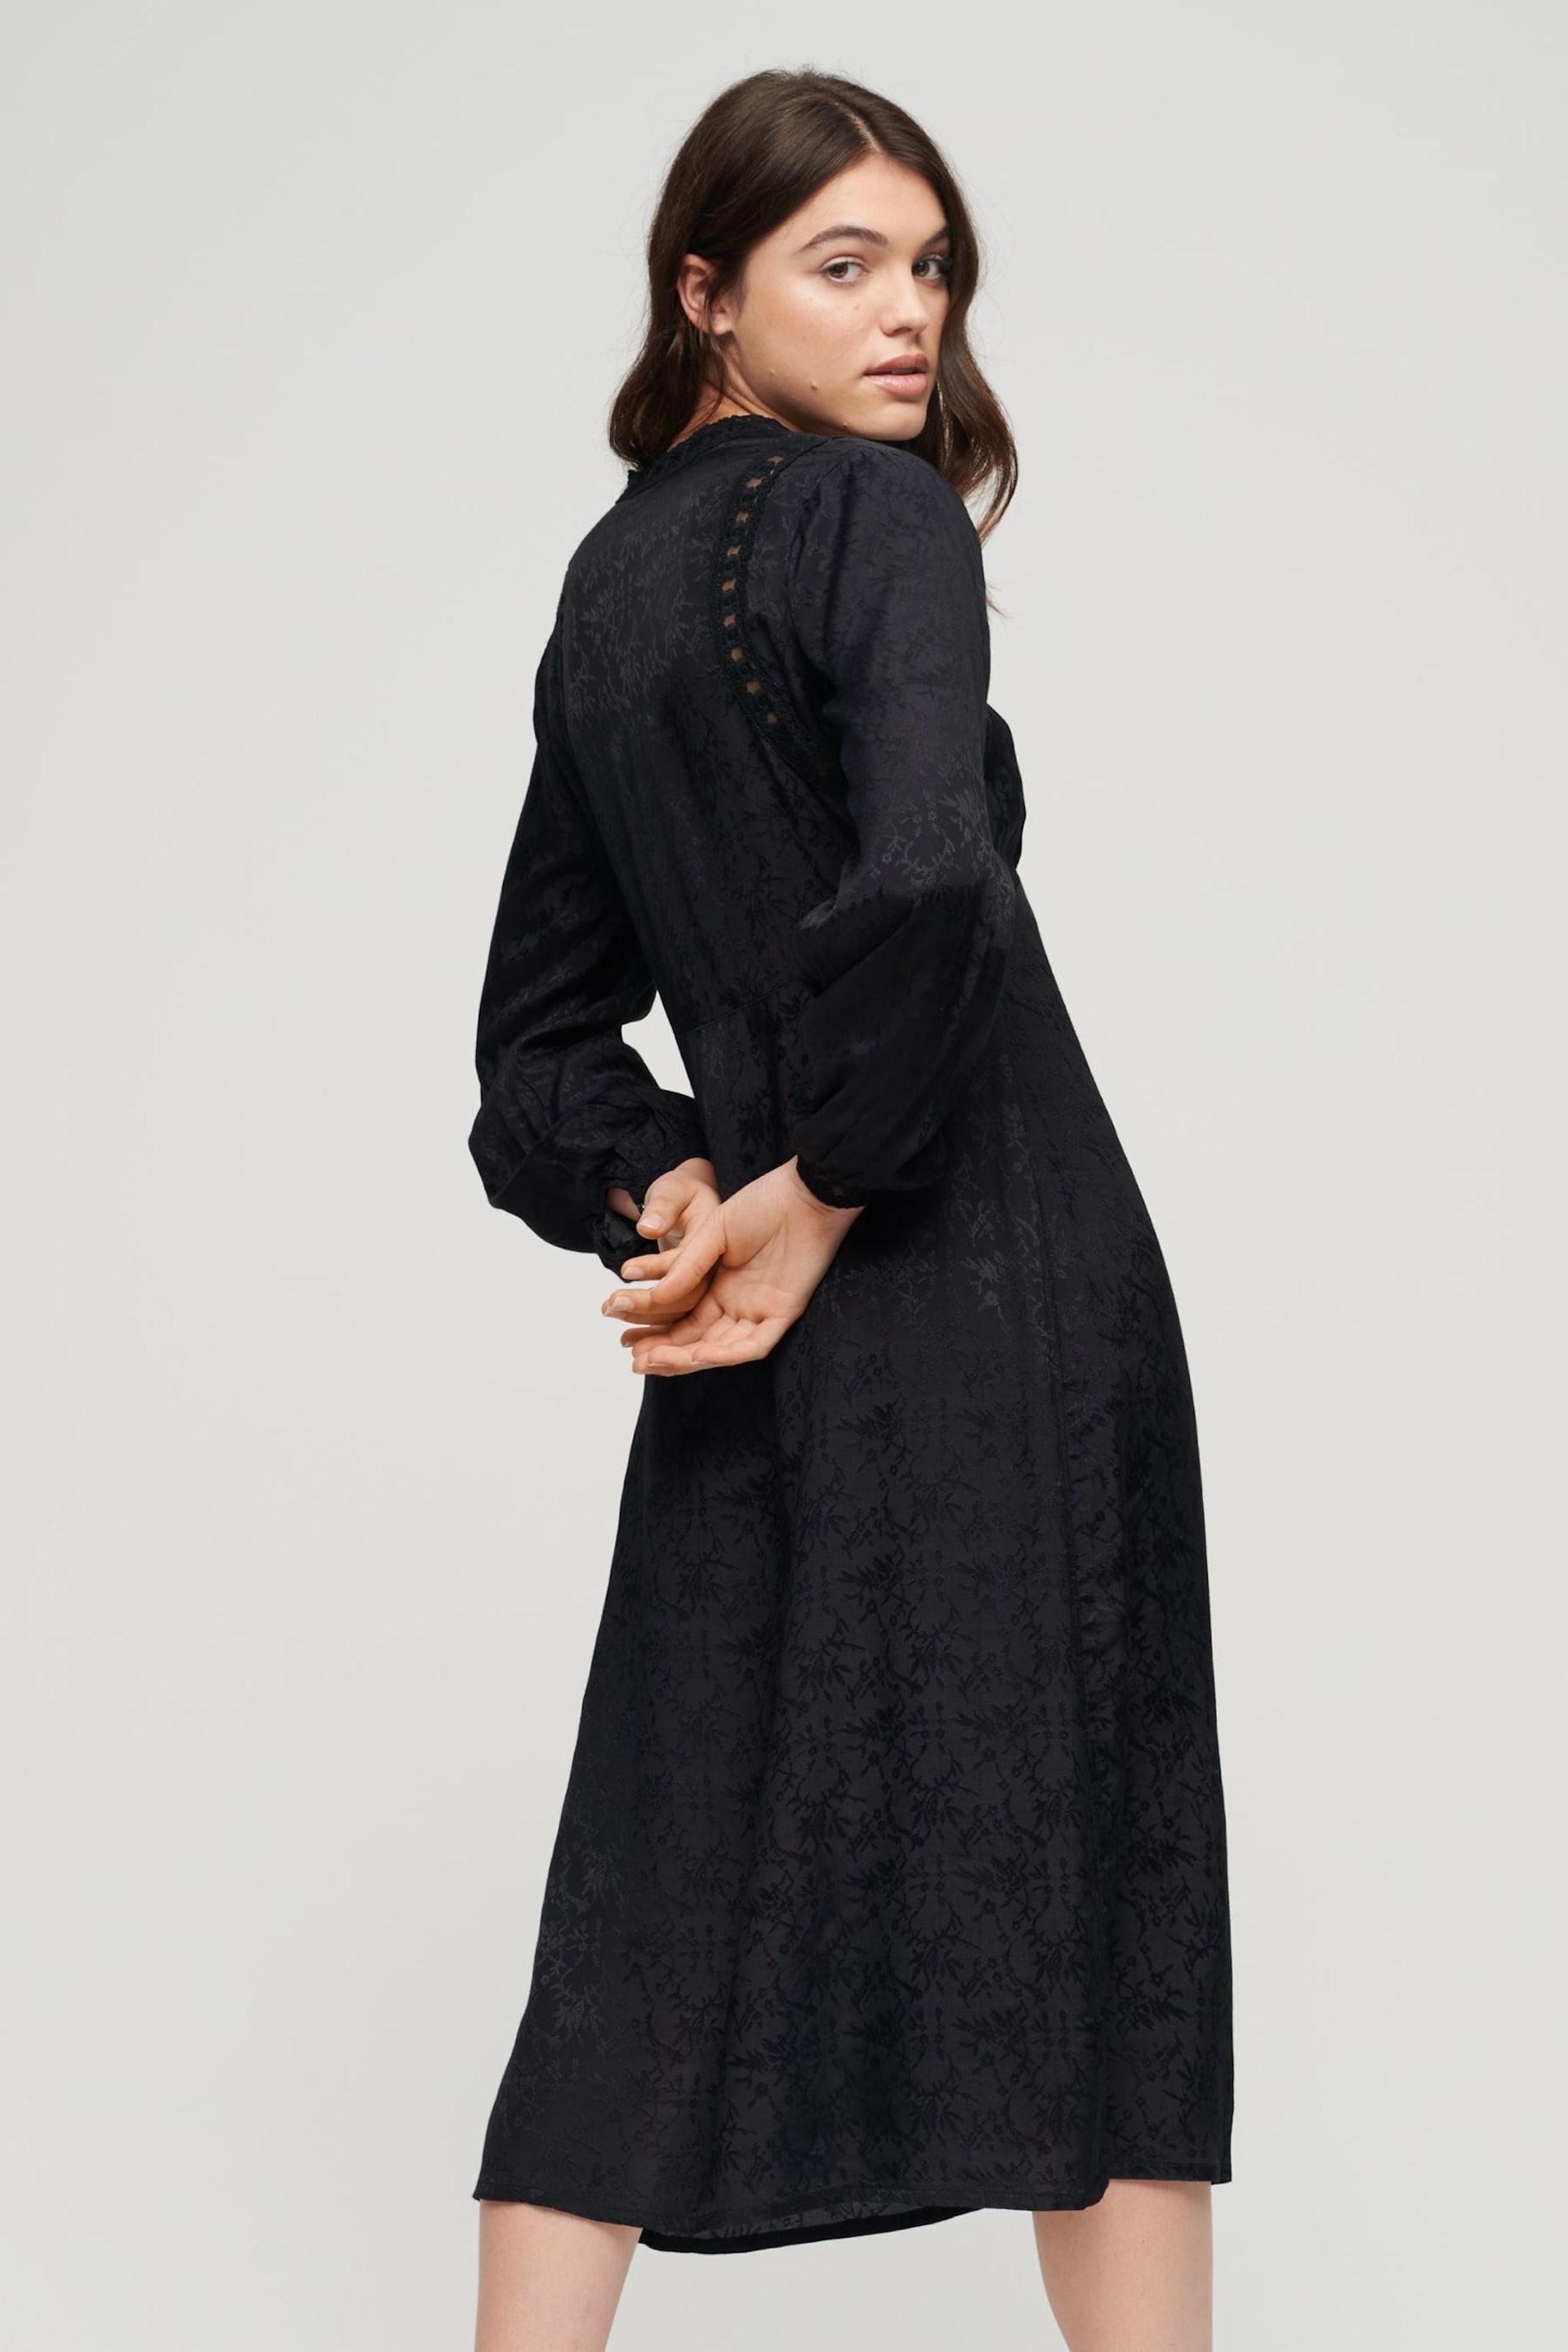 Superdry Black Lace Trim Midi Dress - Image 1 of 6